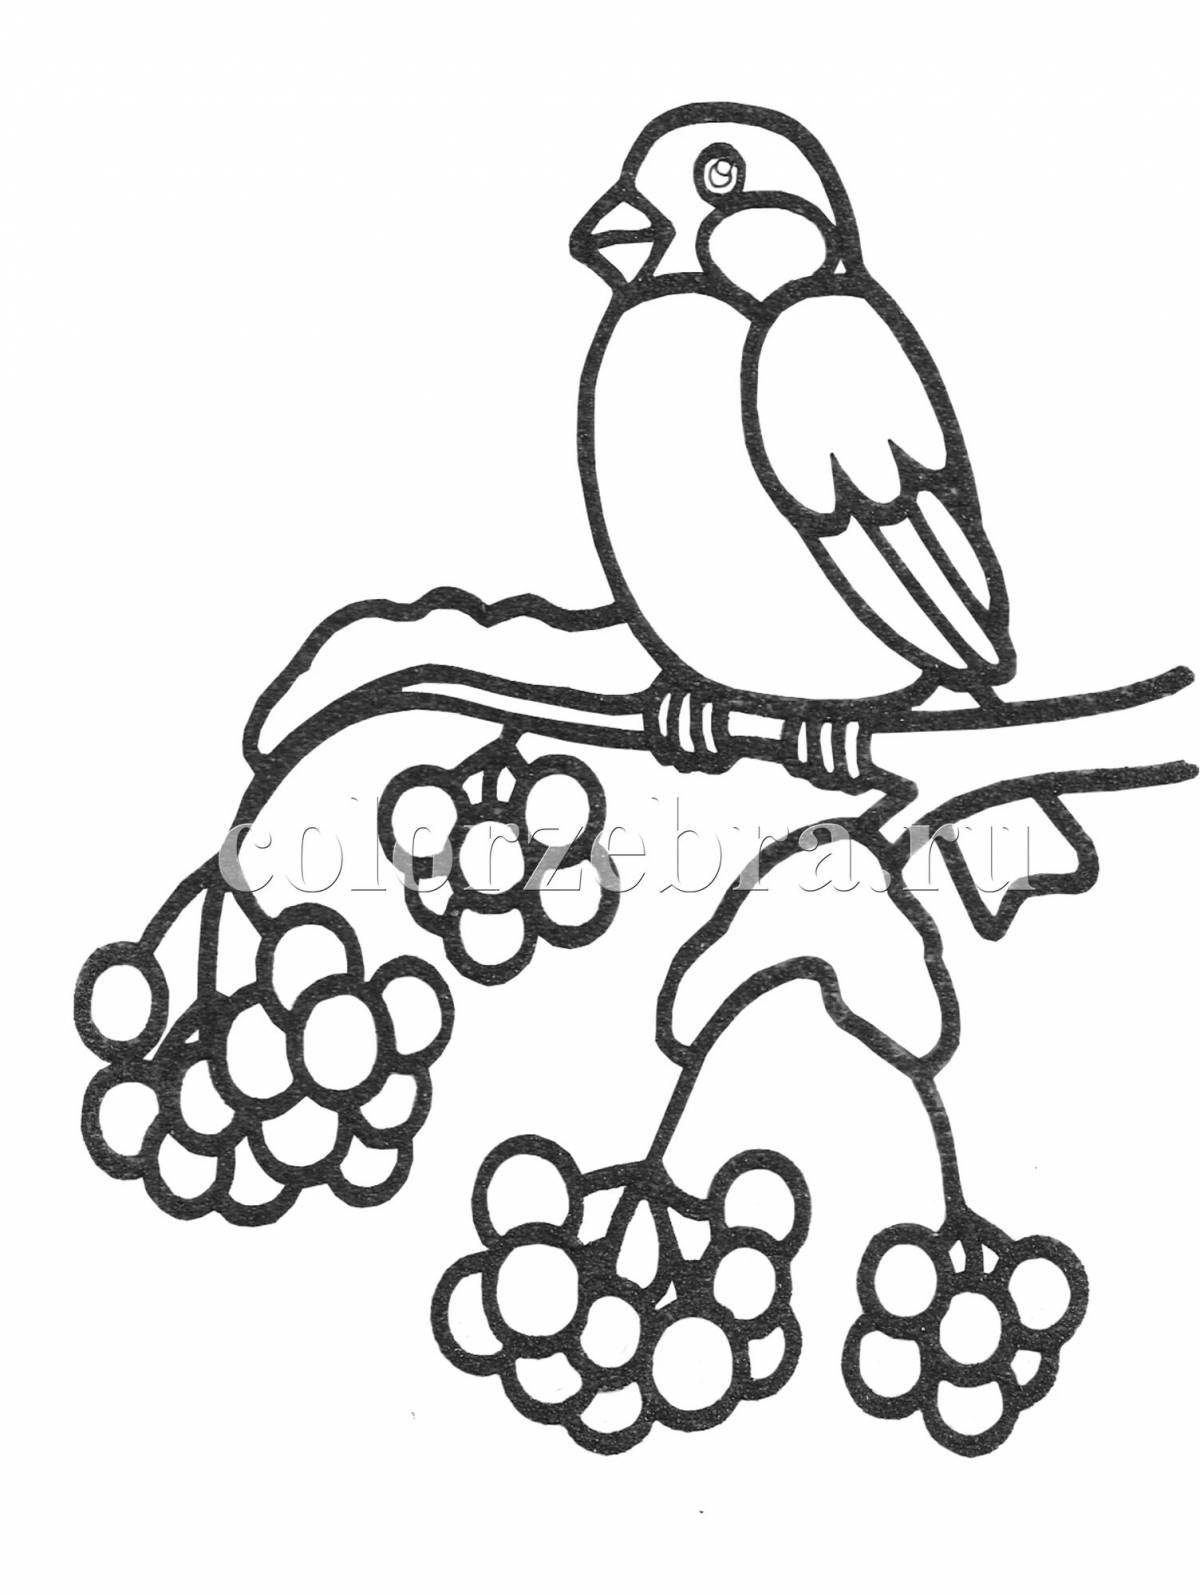 A fascinating drawing of a bullfinch on a rowan branch